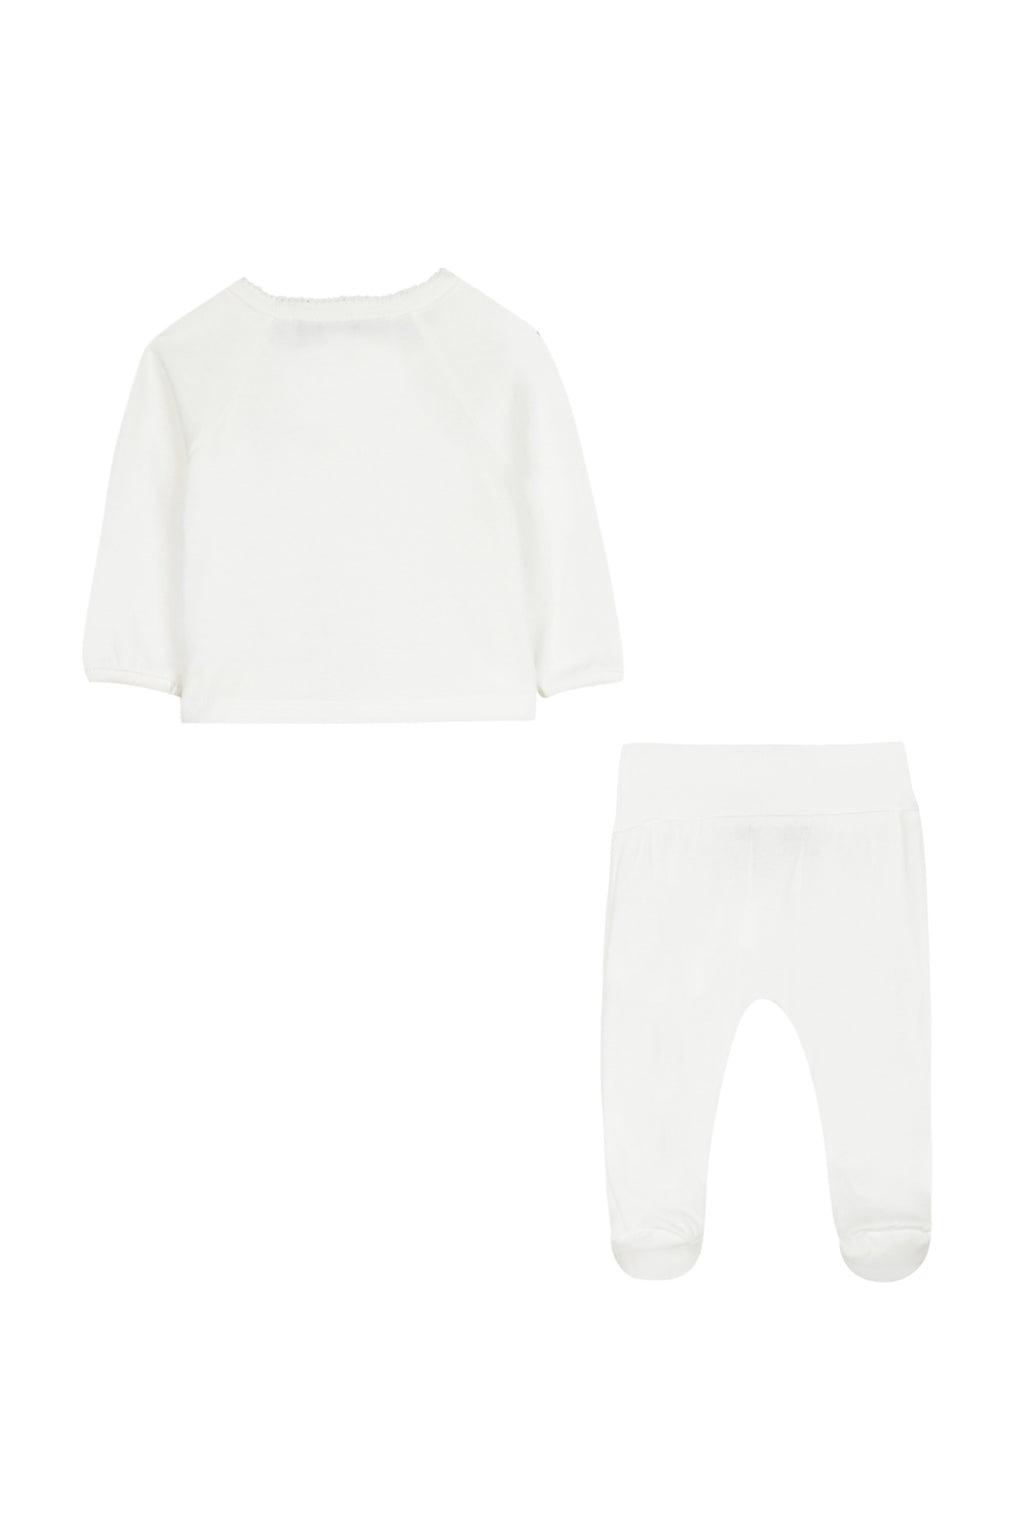 Outfit - Long White organic cotton chalk